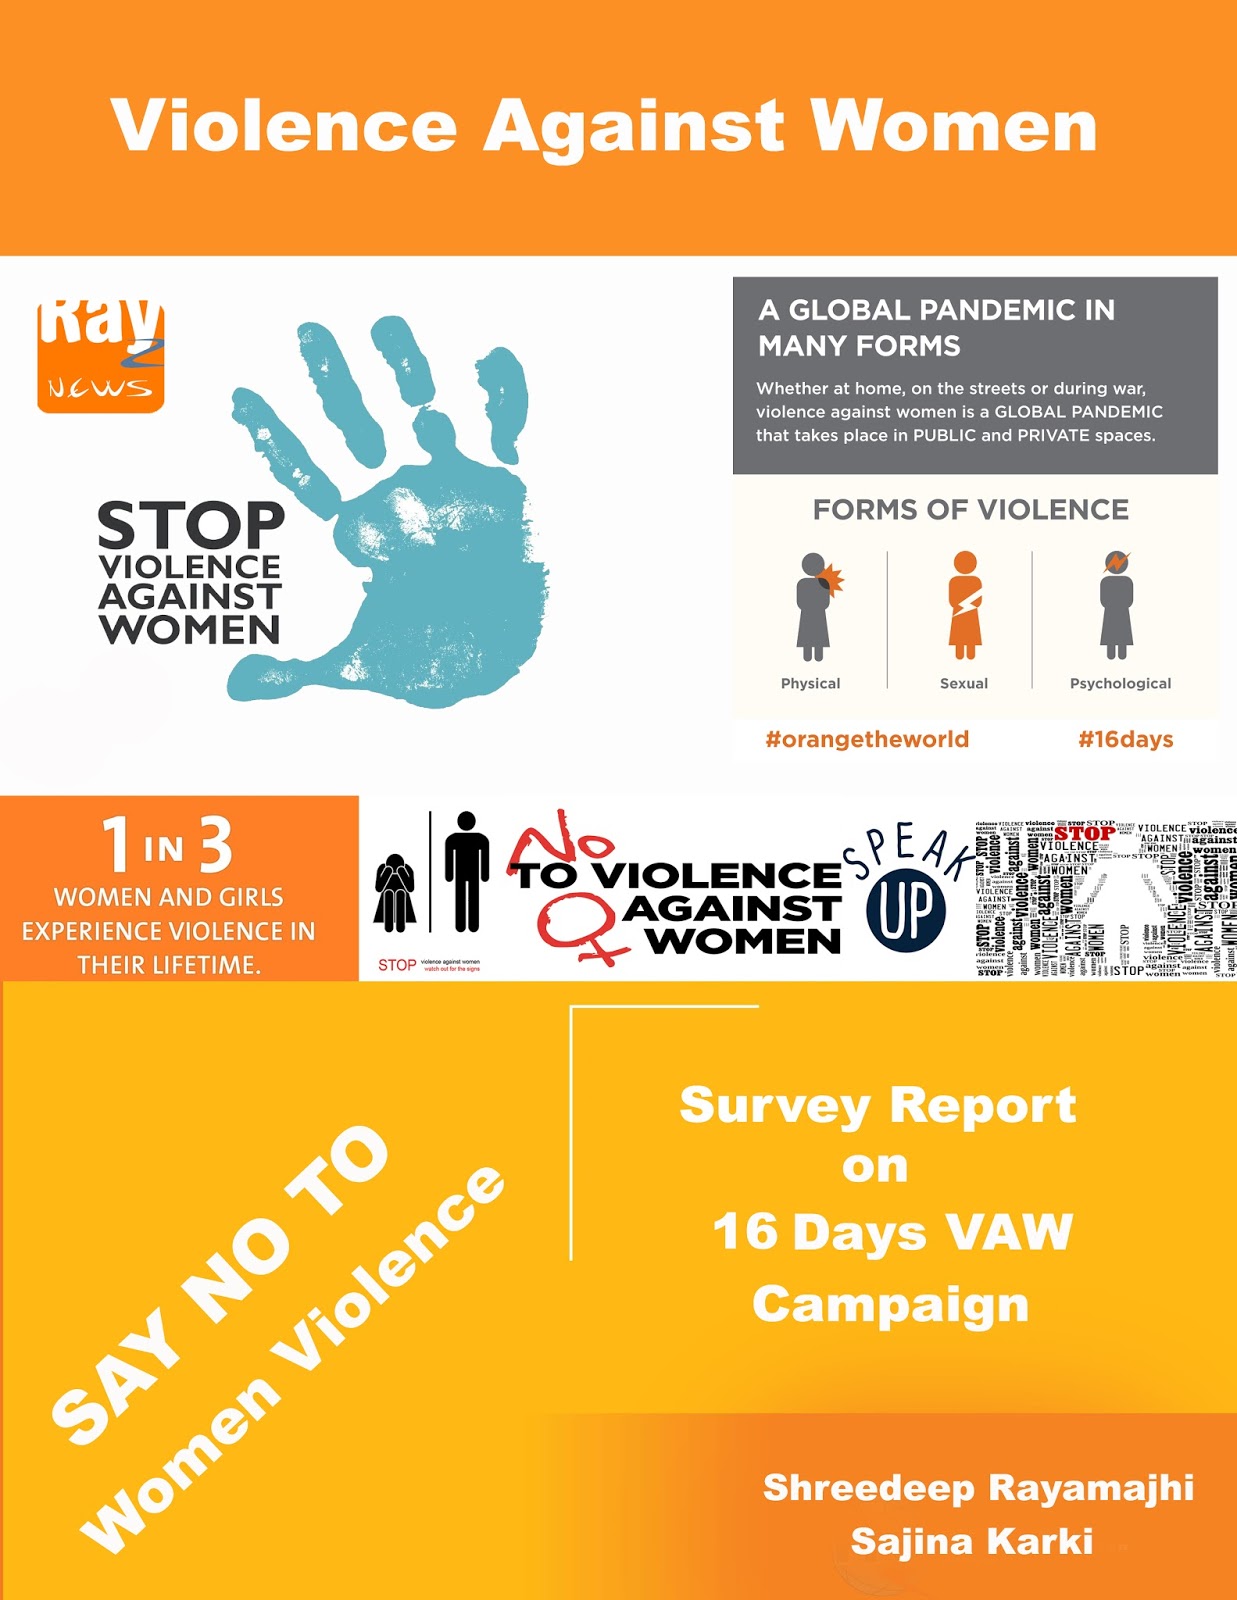 Survey Report published on 16 days Orange the world VAW - DEDICATED to ...